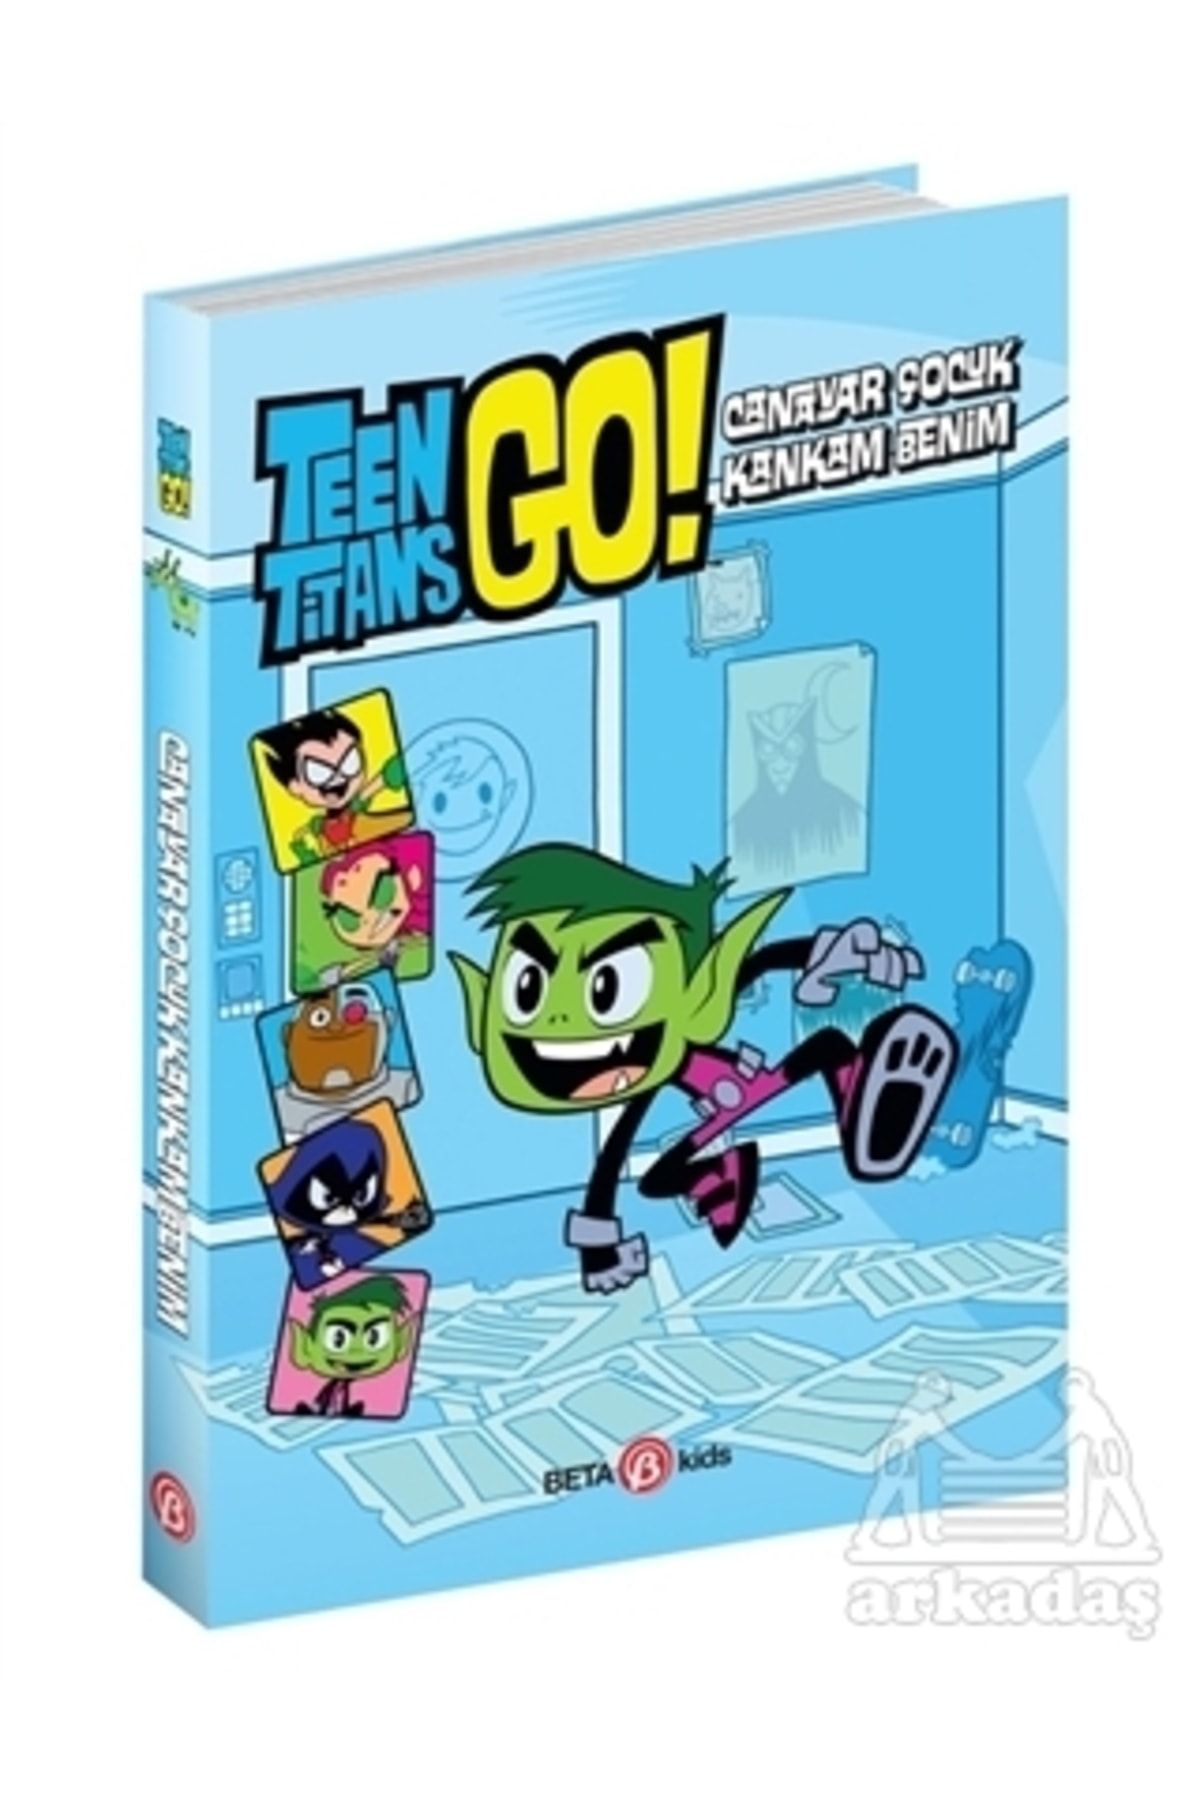 Beta Kids Dc Comics: Teen Titans Go! Canavar Çocuk Kankam Benim!